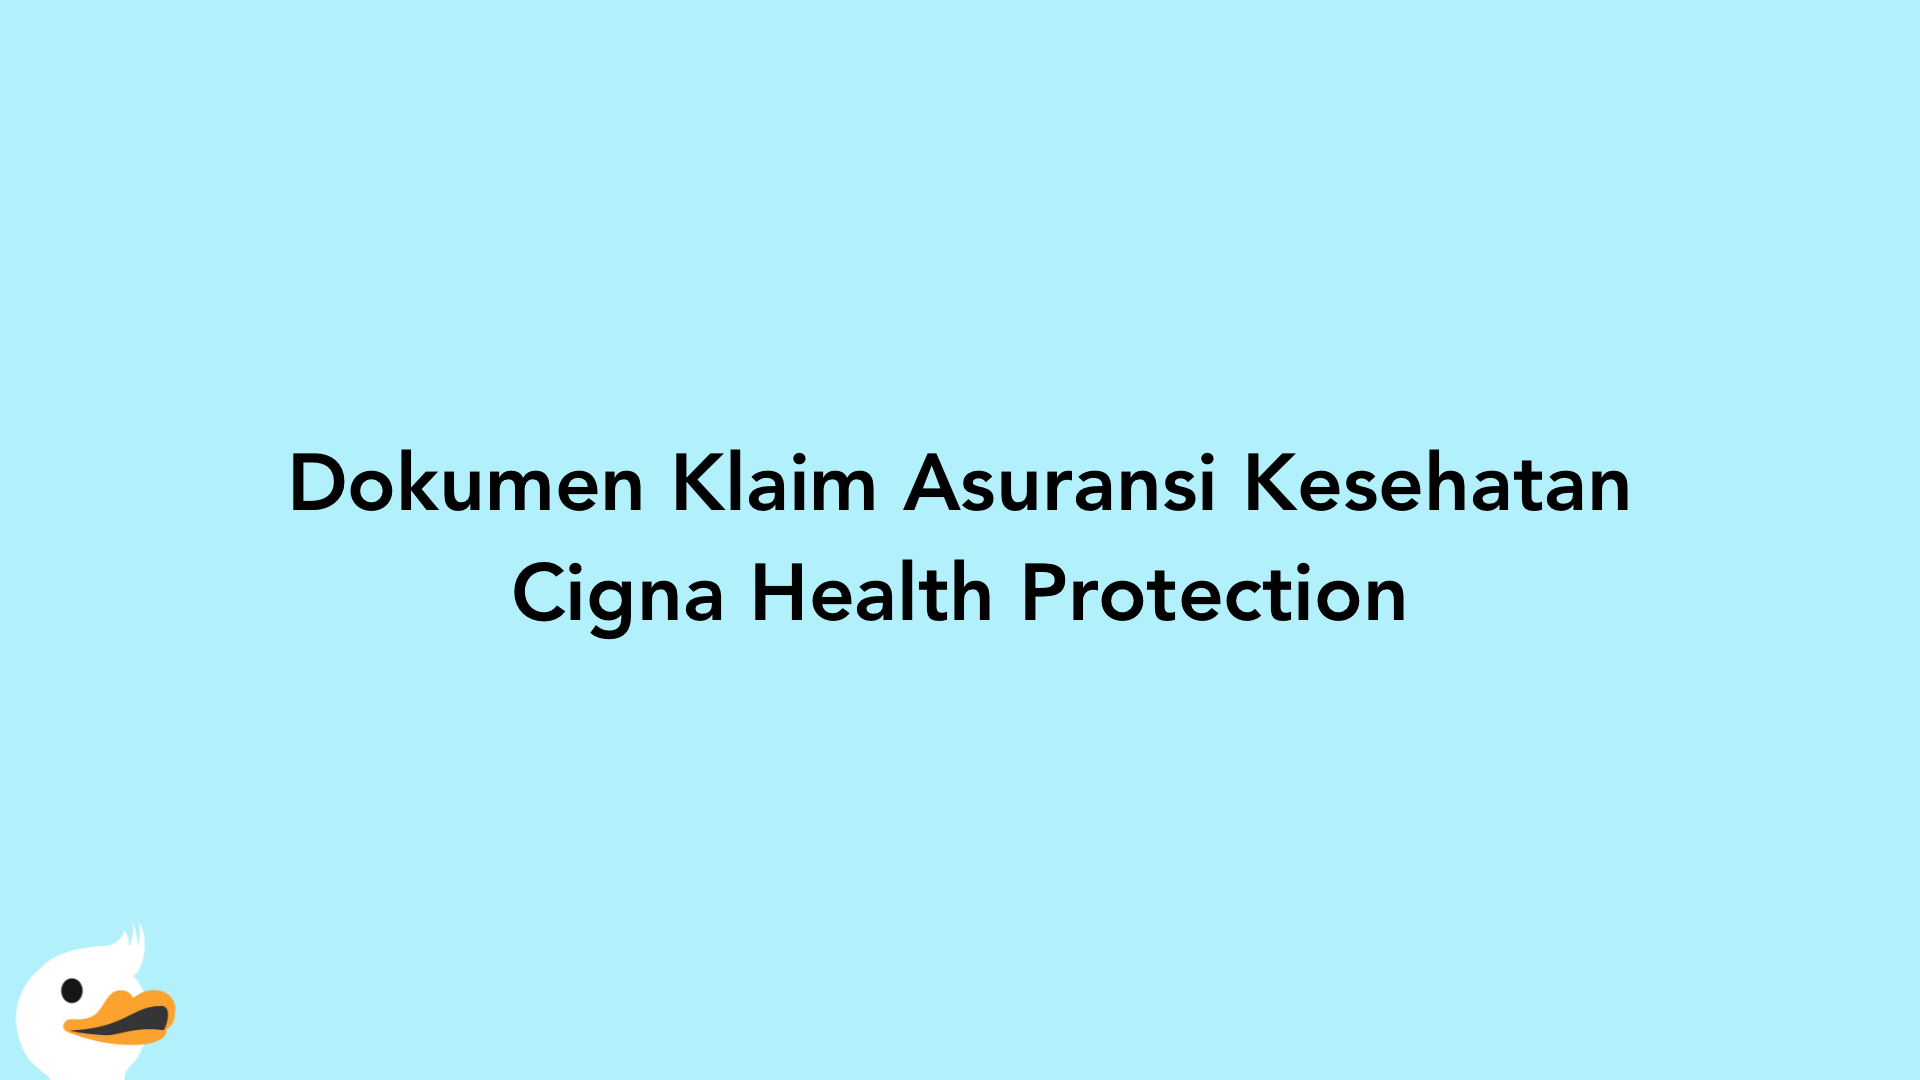 Dokumen Klaim Asuransi Kesehatan Cigna Health Protection